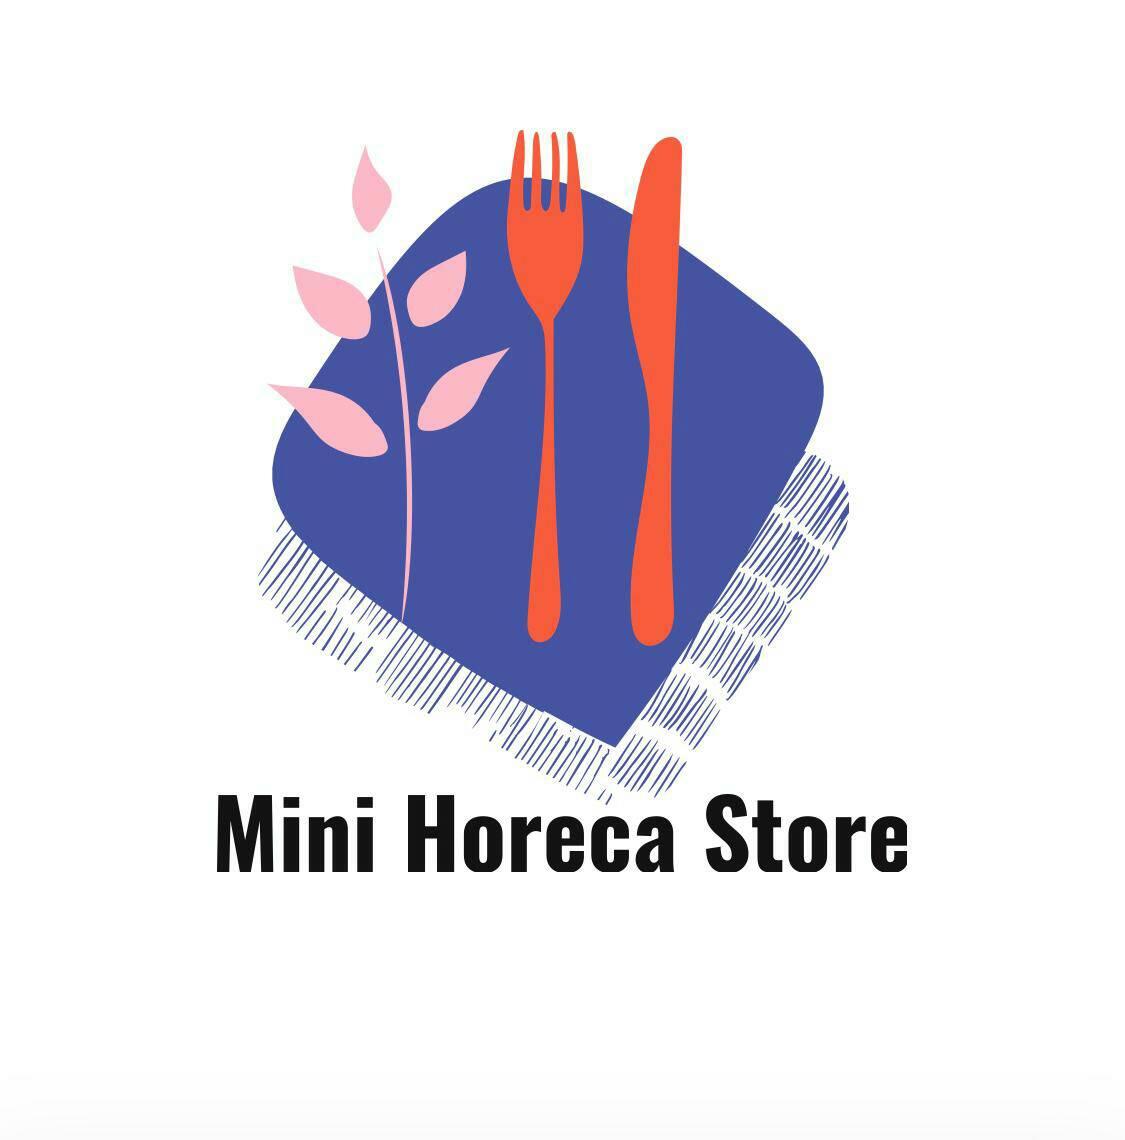 Mini Horeca Store